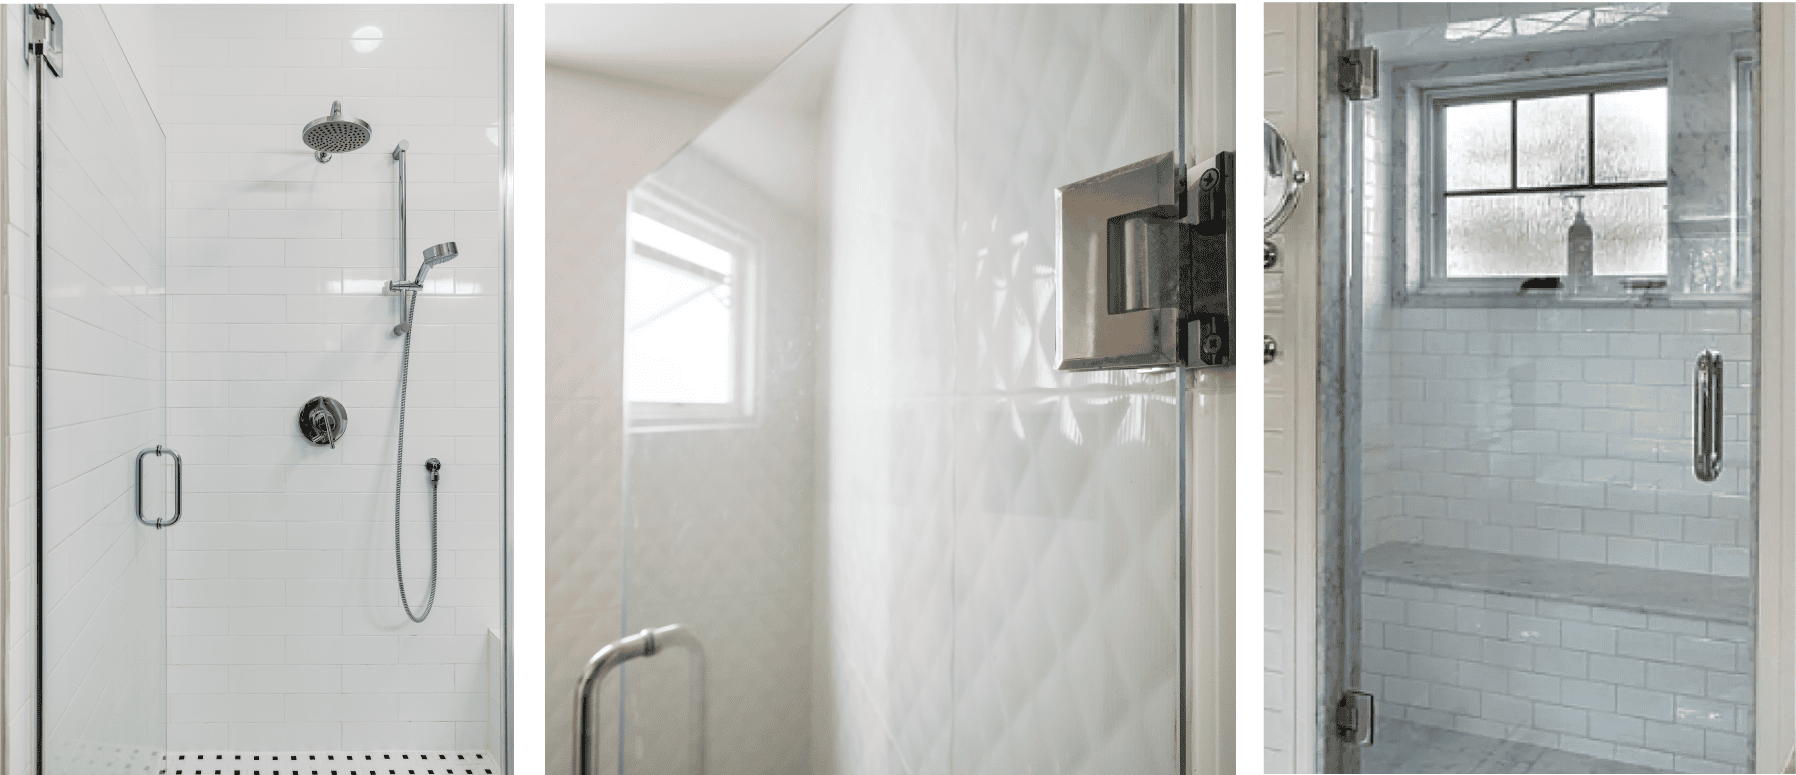 How to Install DIY Bathtub Doors or Panels